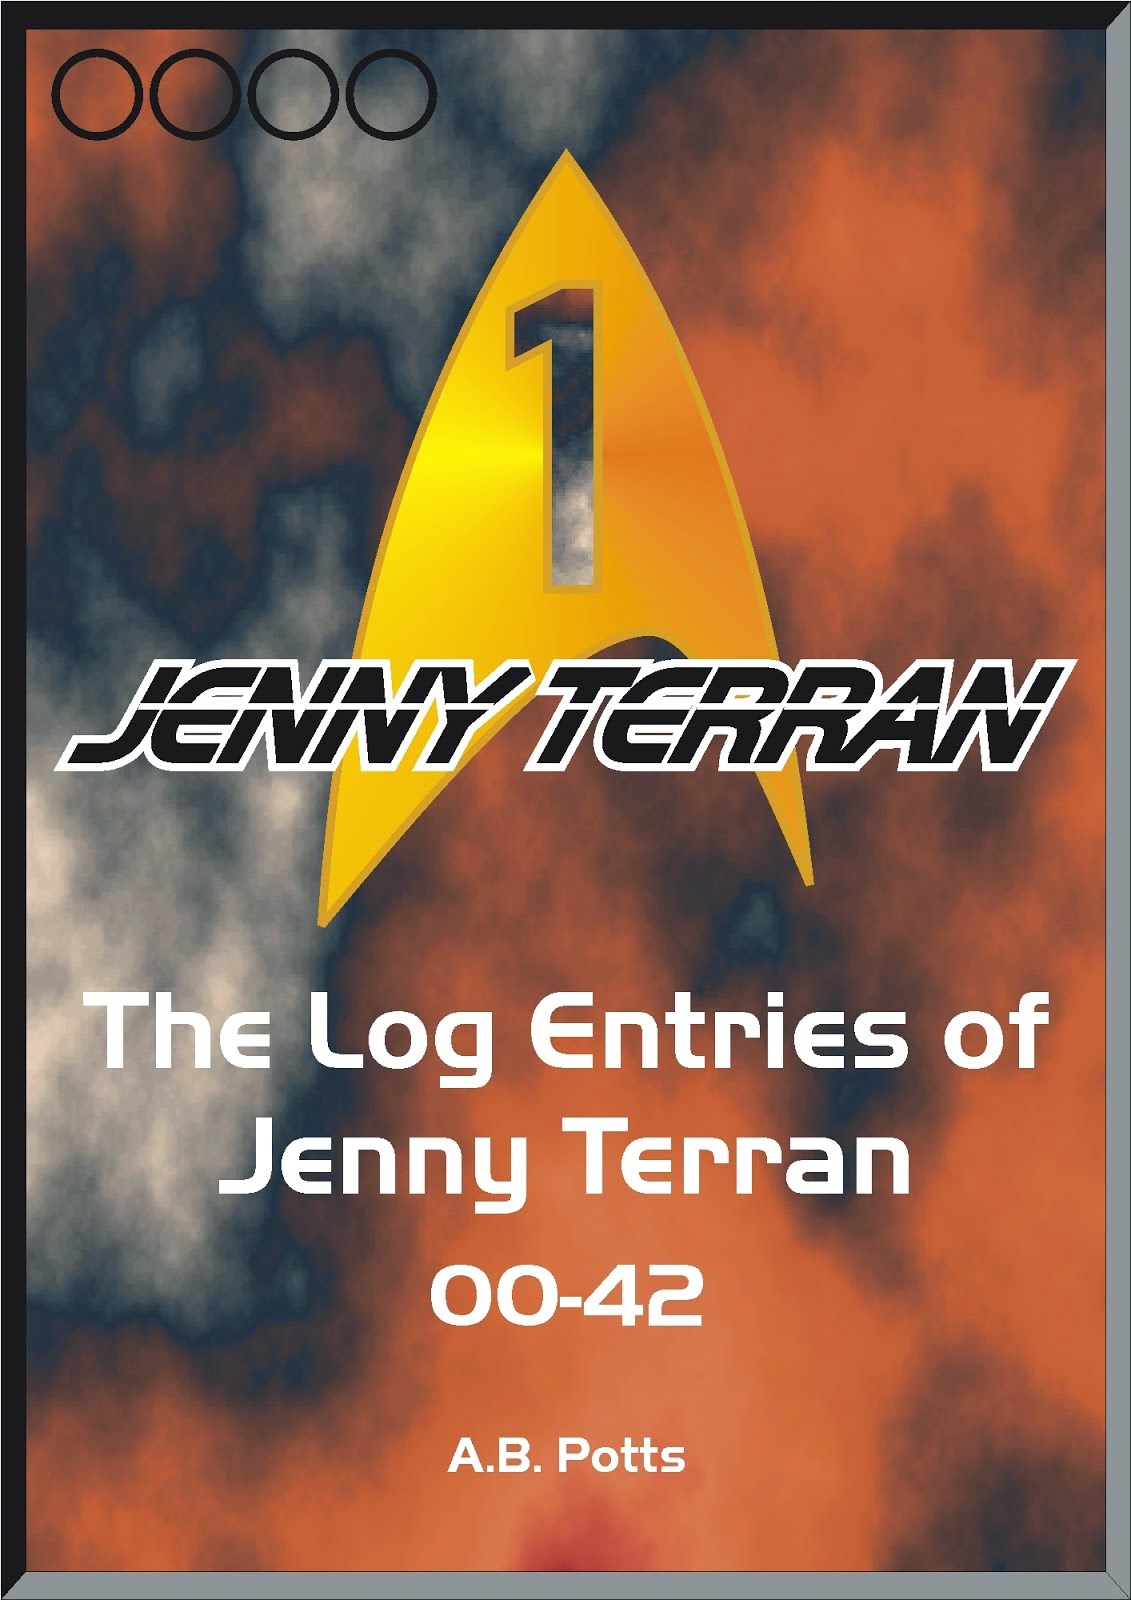 Meet Jenny Terran ...